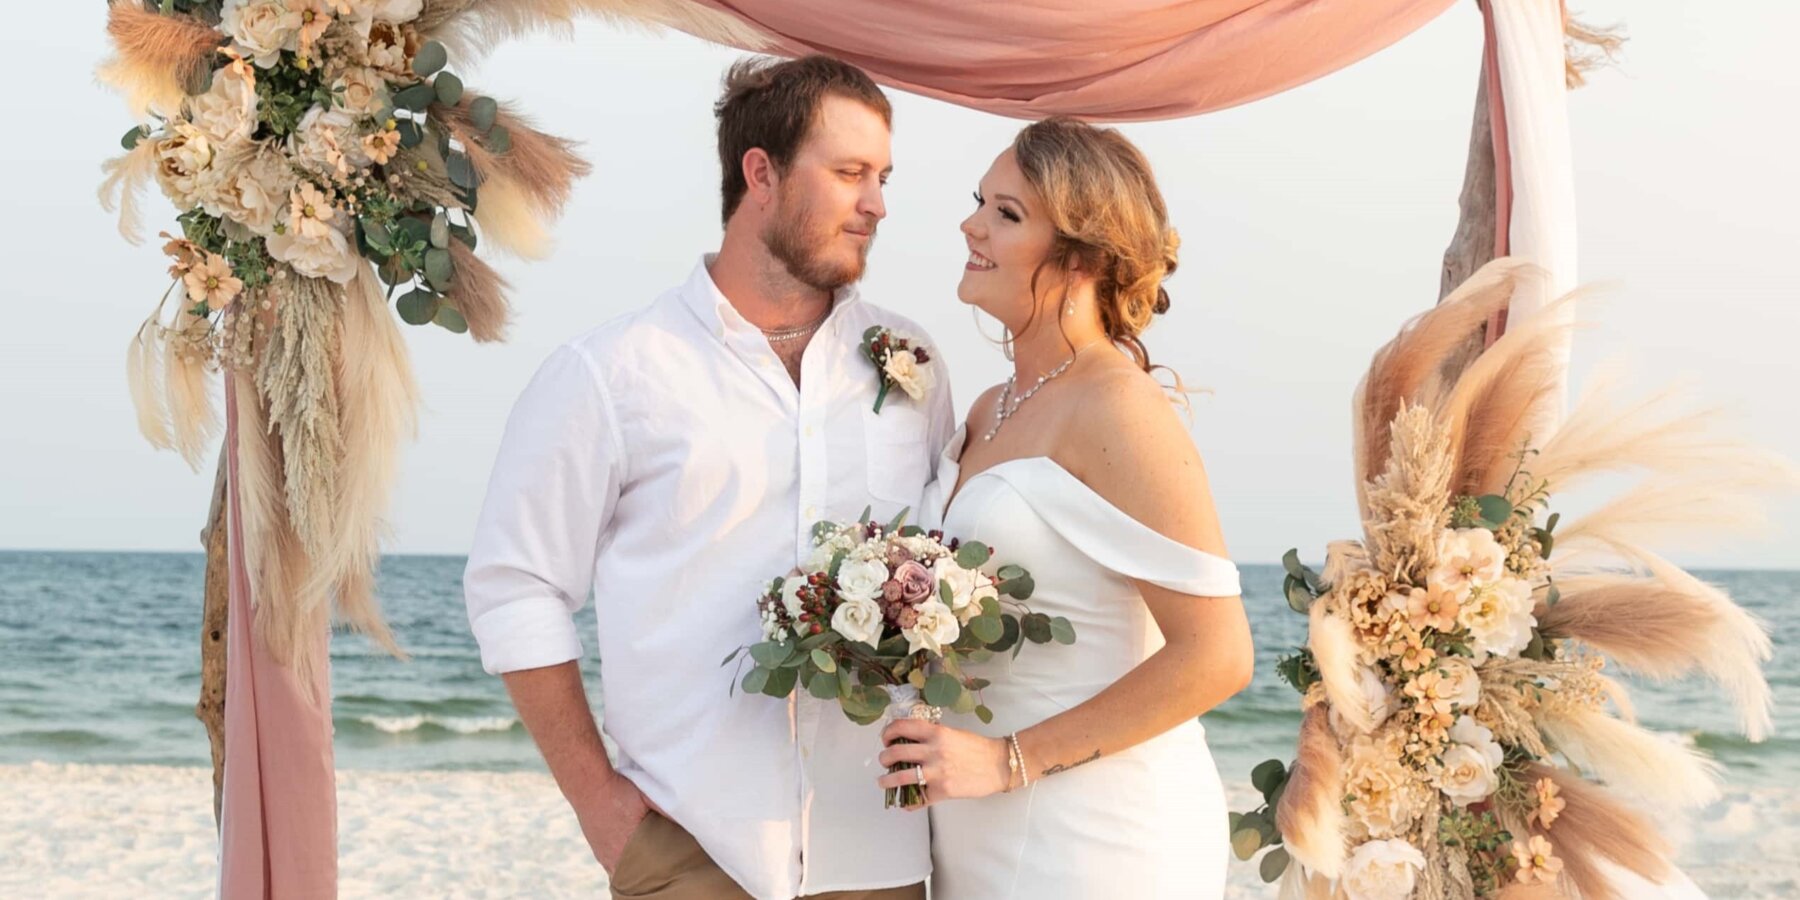 Gulf Shores and Orange Beach Wedding Planners. Driftwood wedding for your dream beach wedding in Alabama